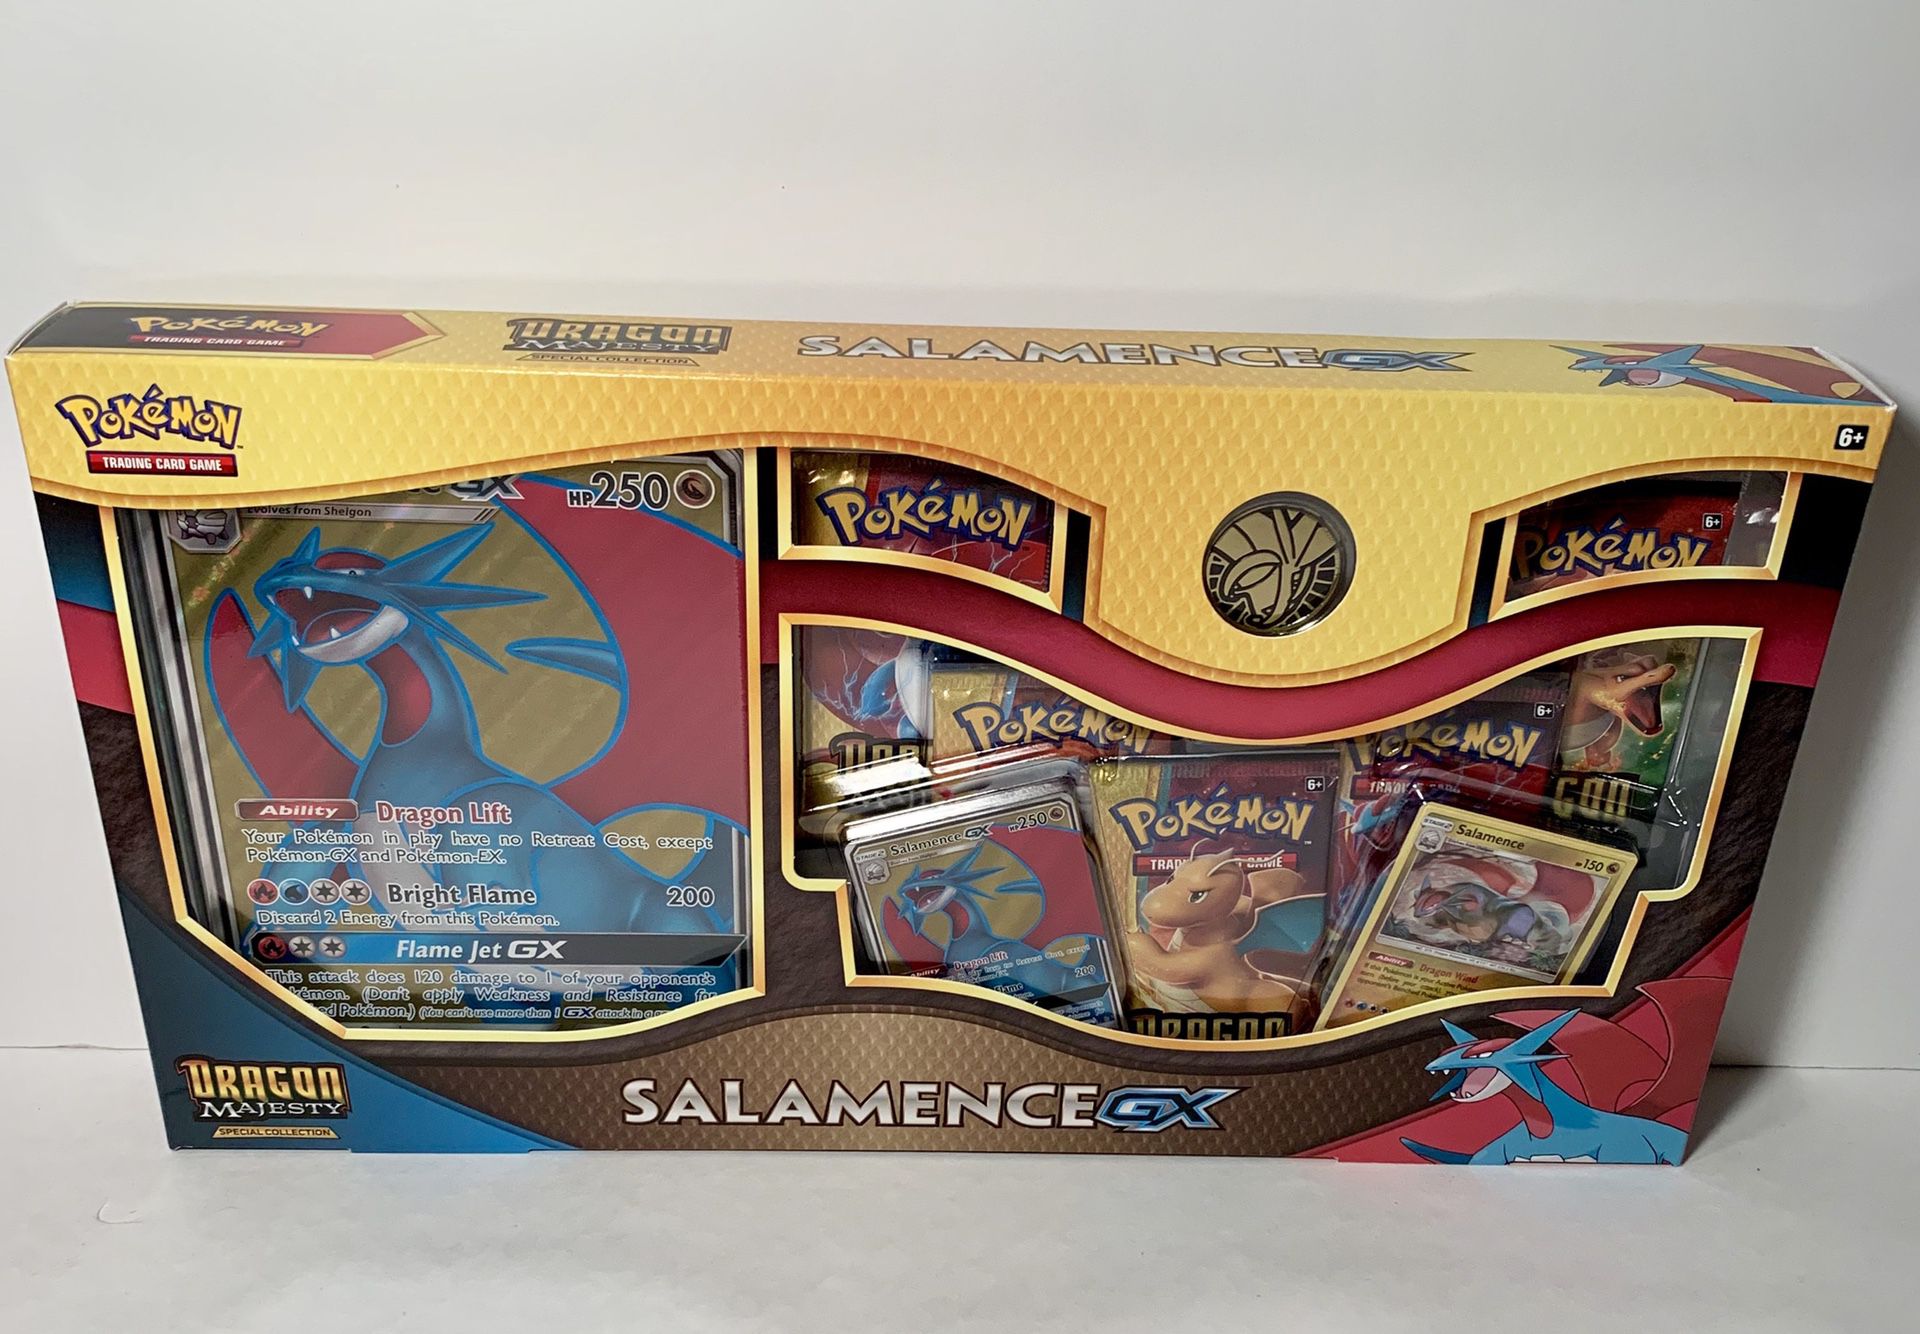 Pokemon TCG Dragon Majesty Salamence Special Collection Box